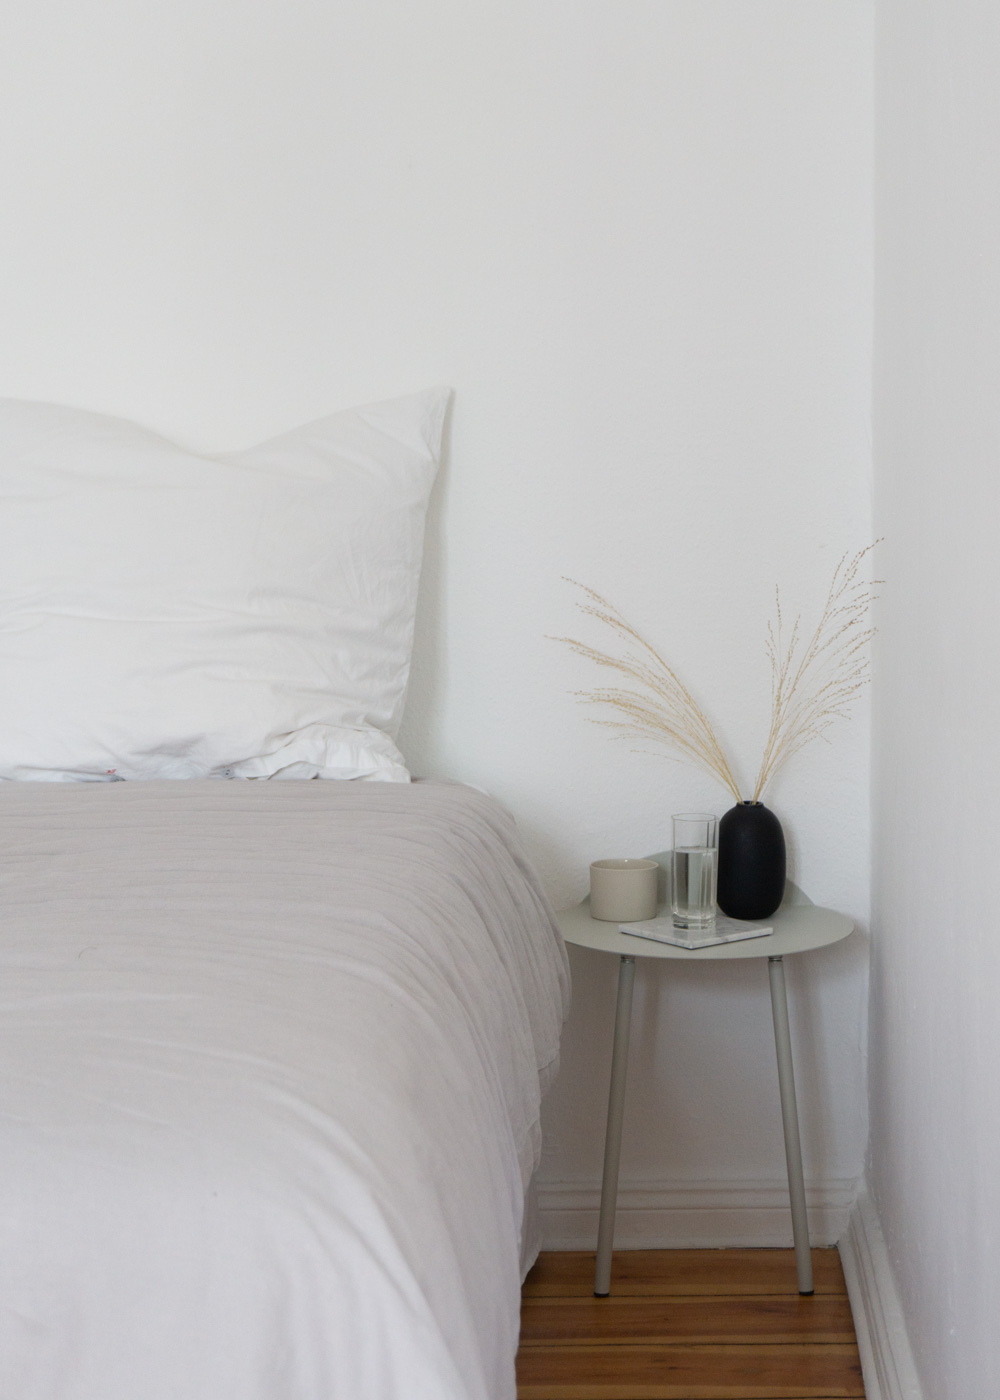 Grey Bedroom, Menu Table - Neutral Home, Scandinavian Aesthetic, Berlin Apartment, White Interior, Calm Lighting | RG Daily Blog